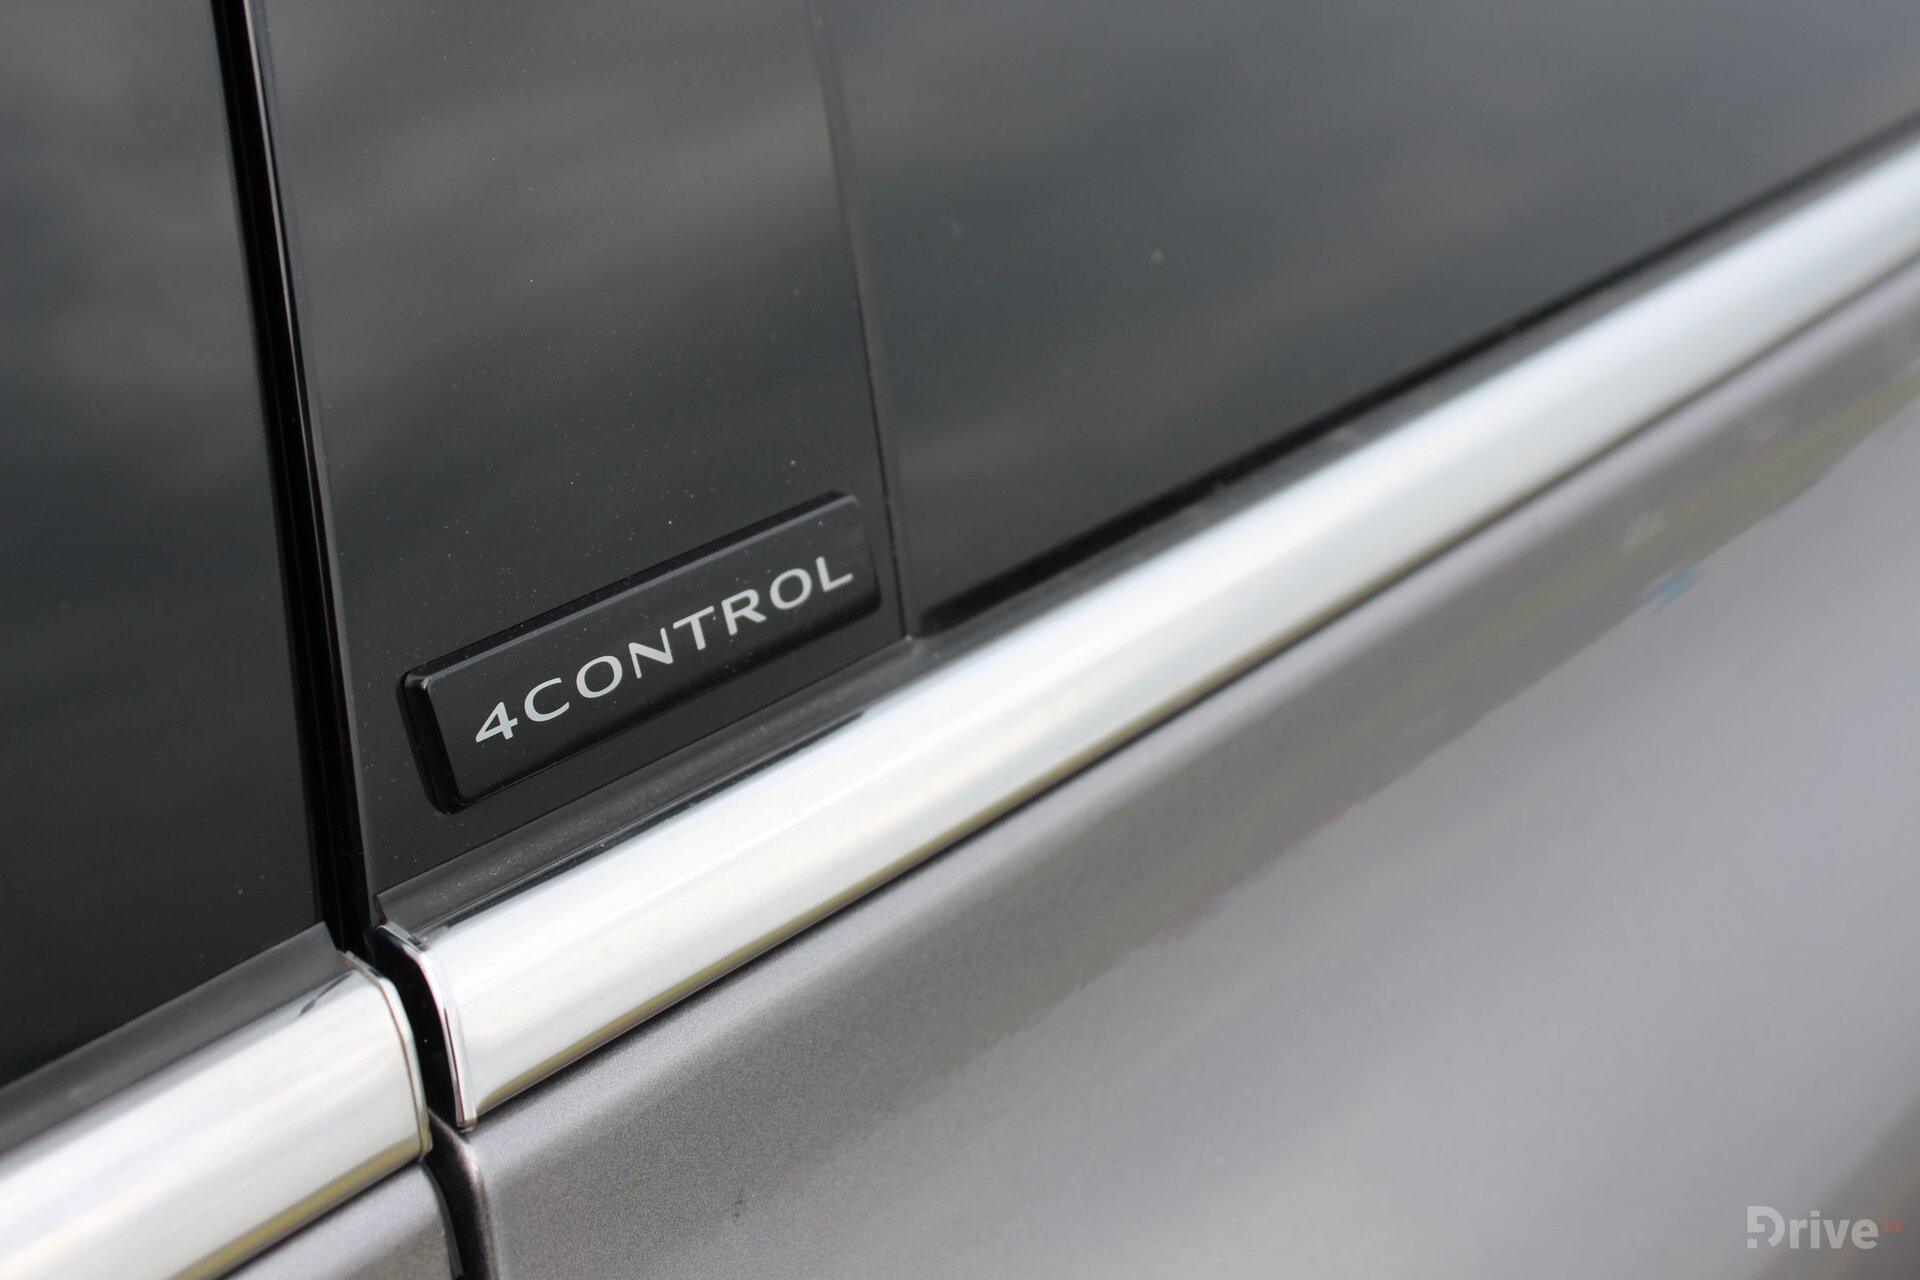 Renault 4Control